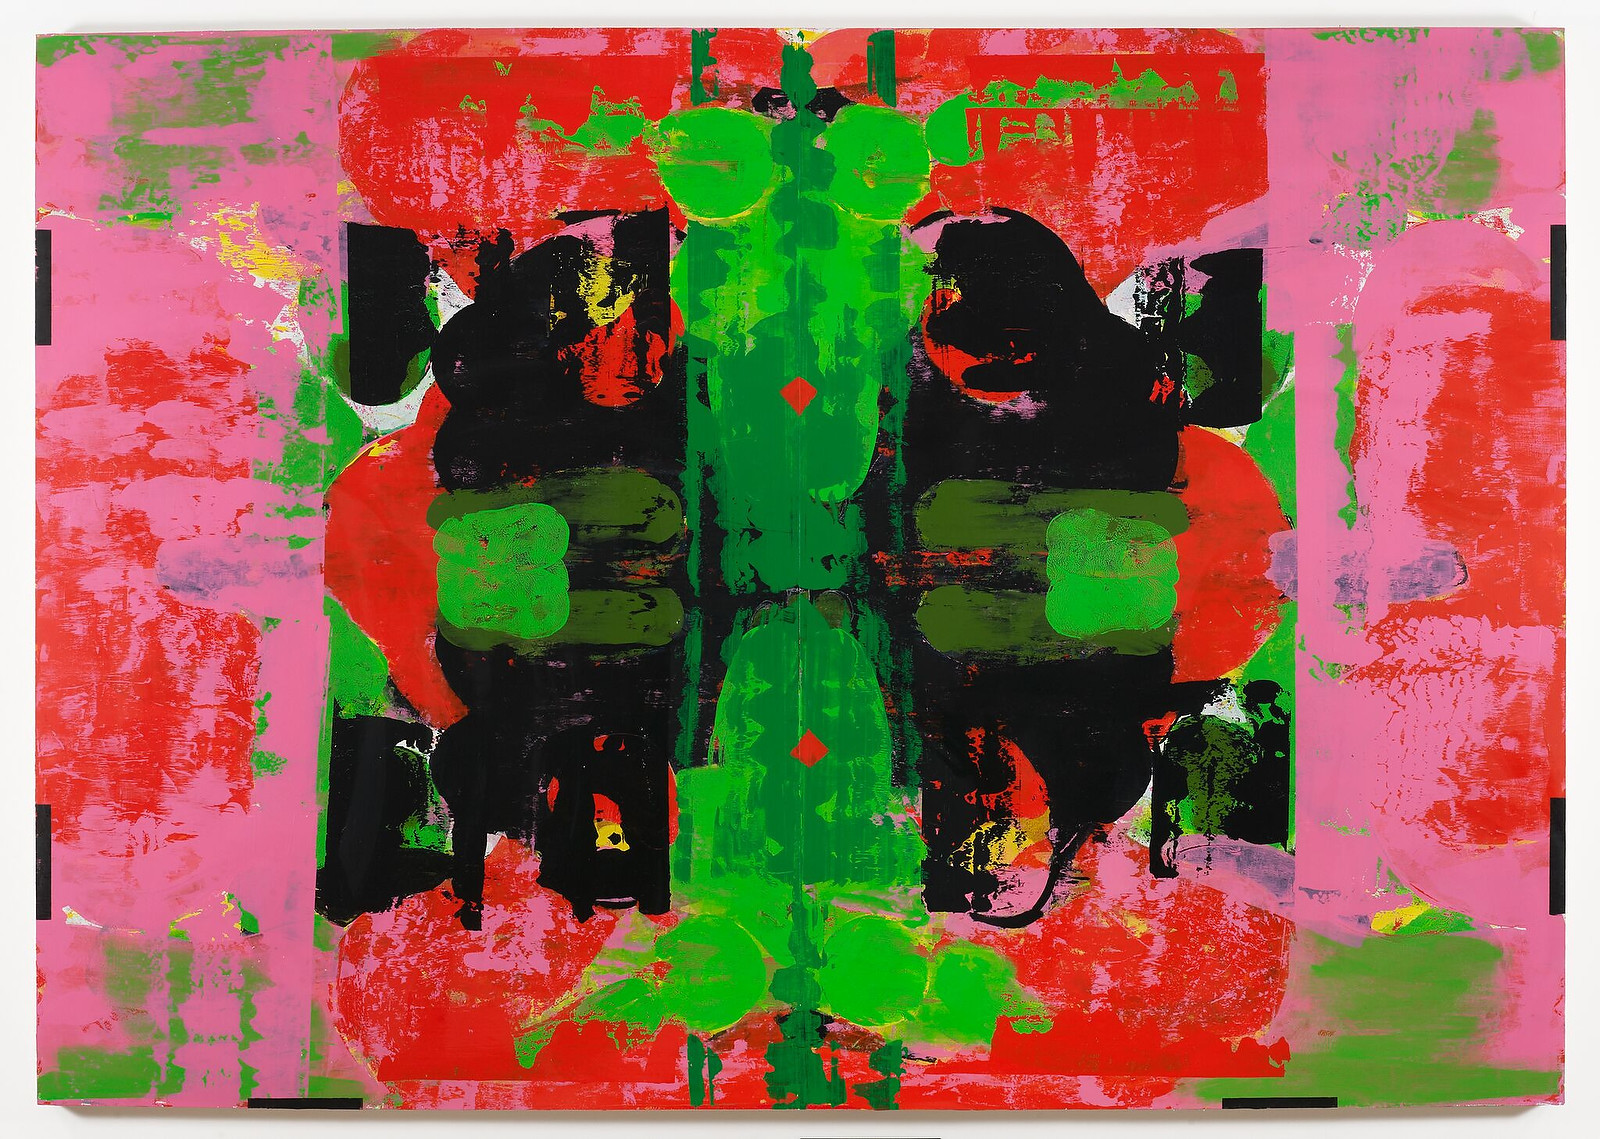 Kerry James Marshall, "Untitled (Blot)," 2014, acrylic on PVC panel